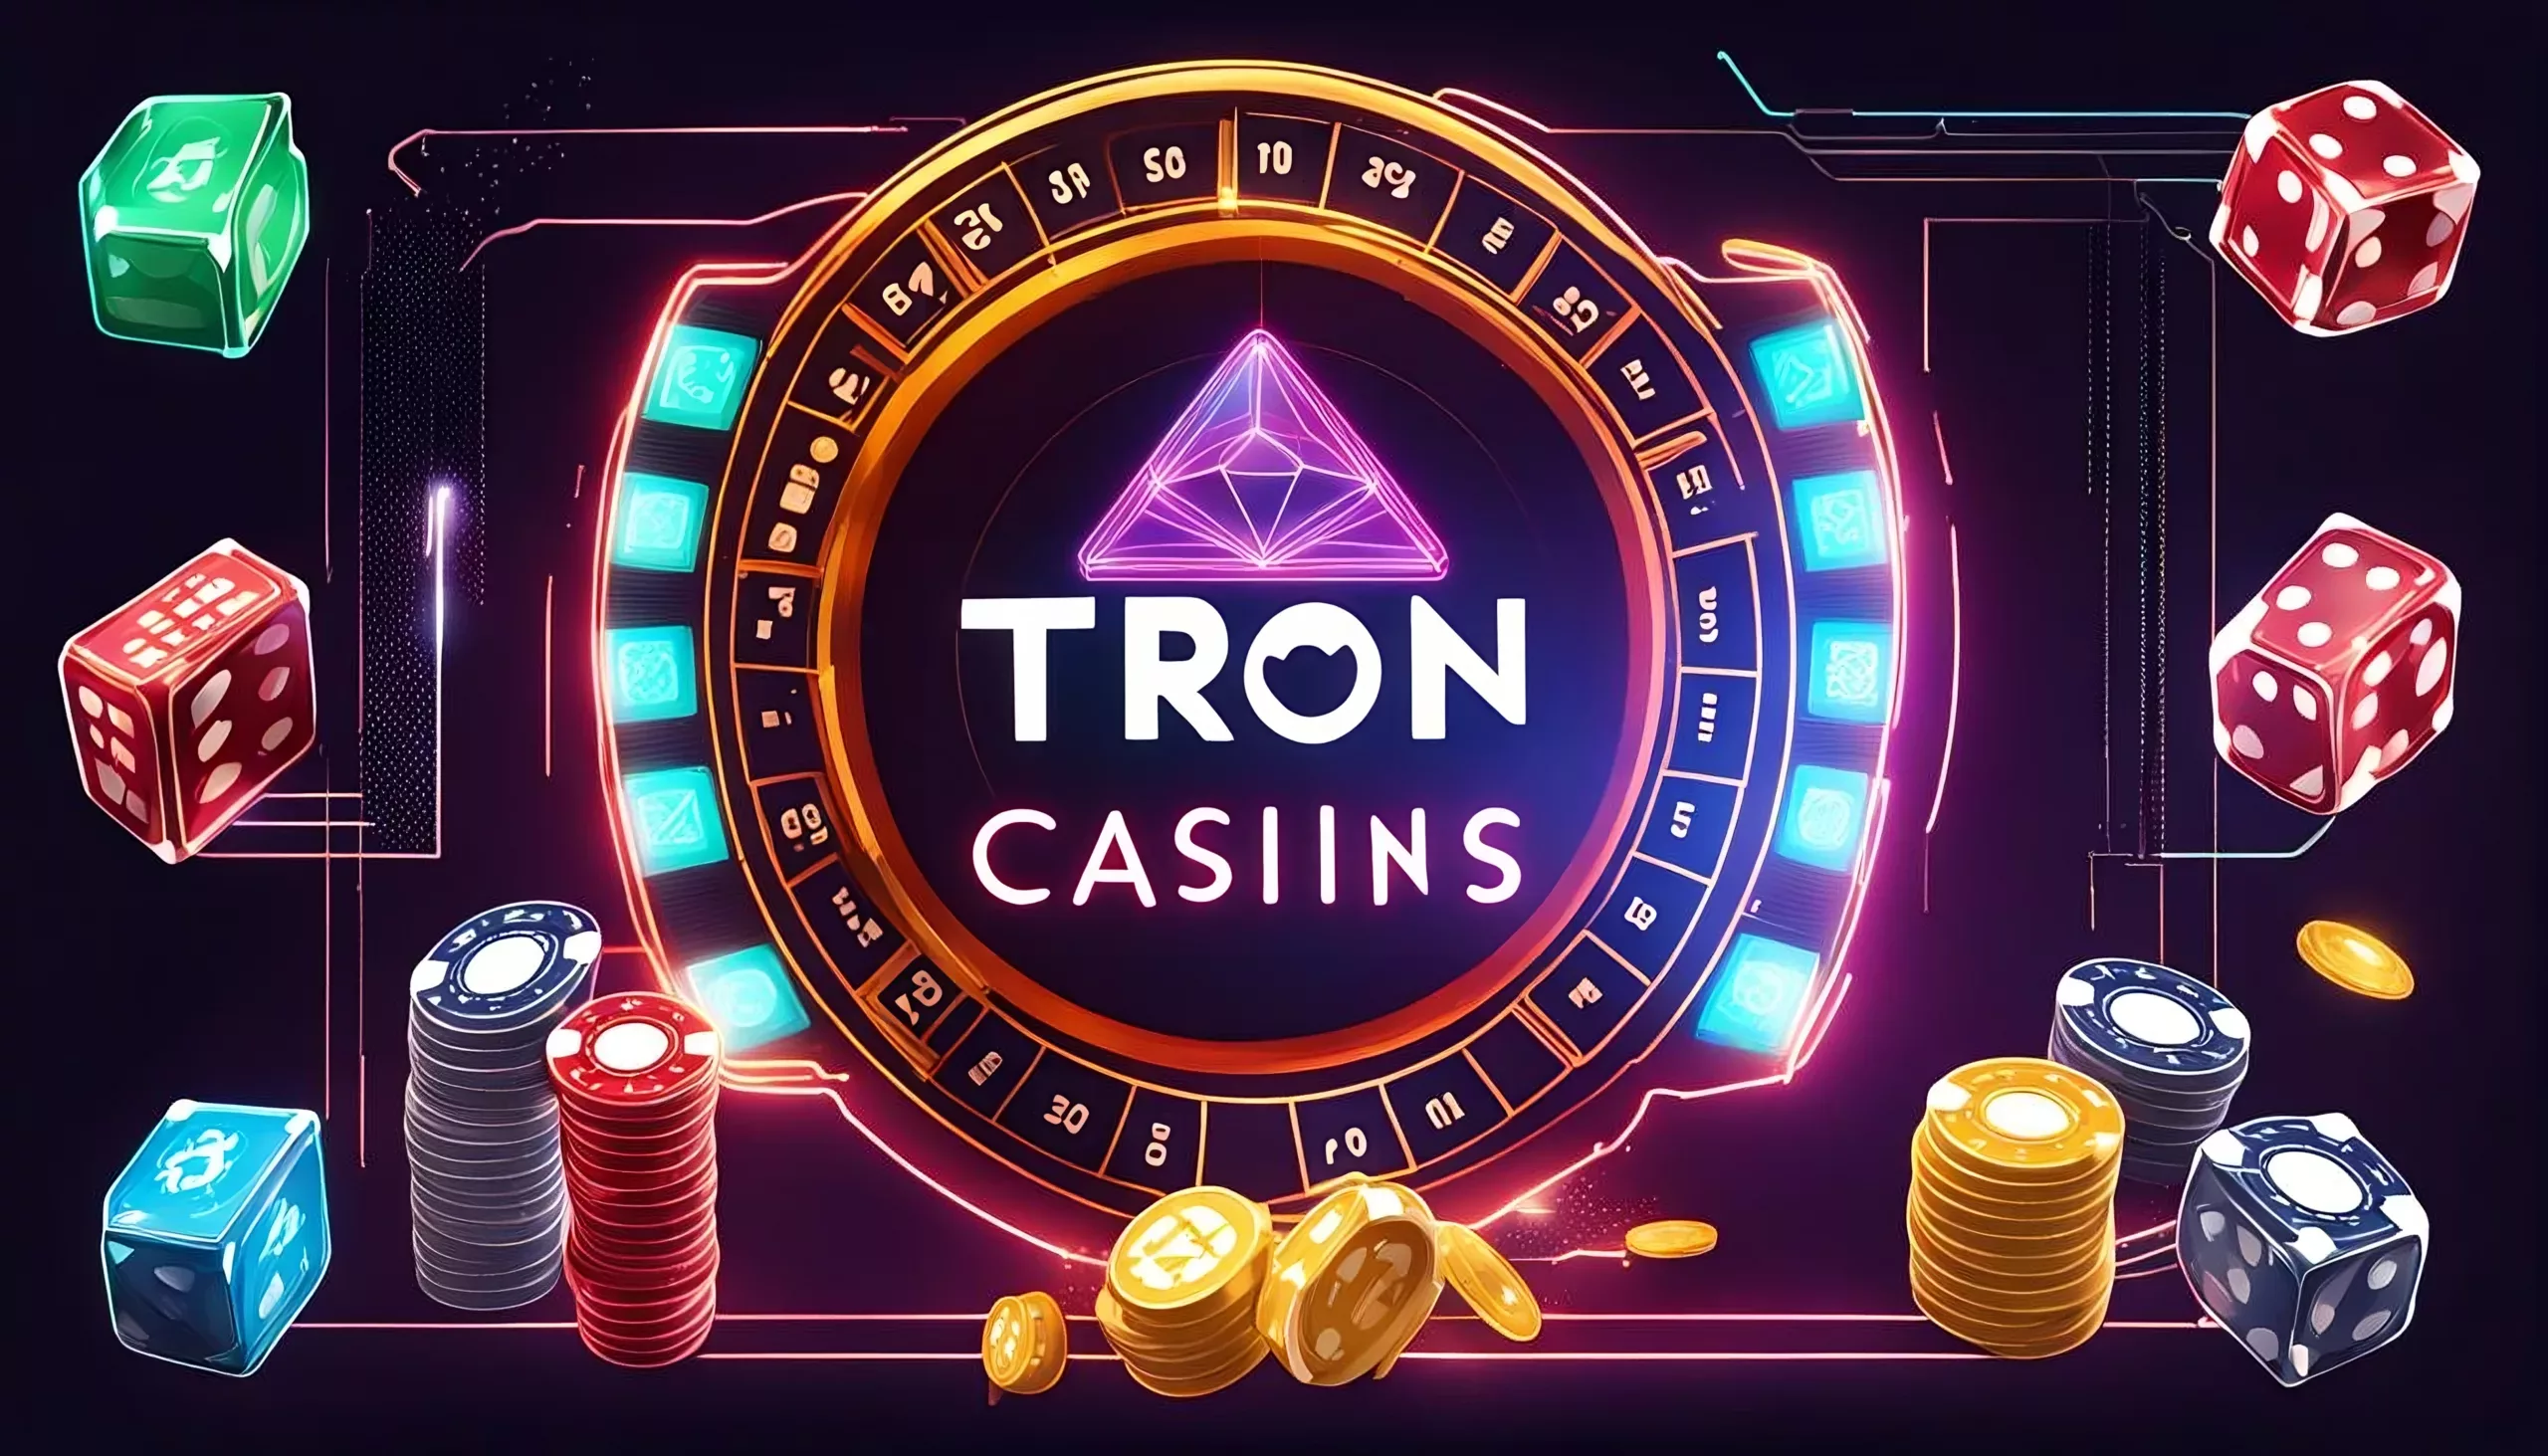 Tron Casinos